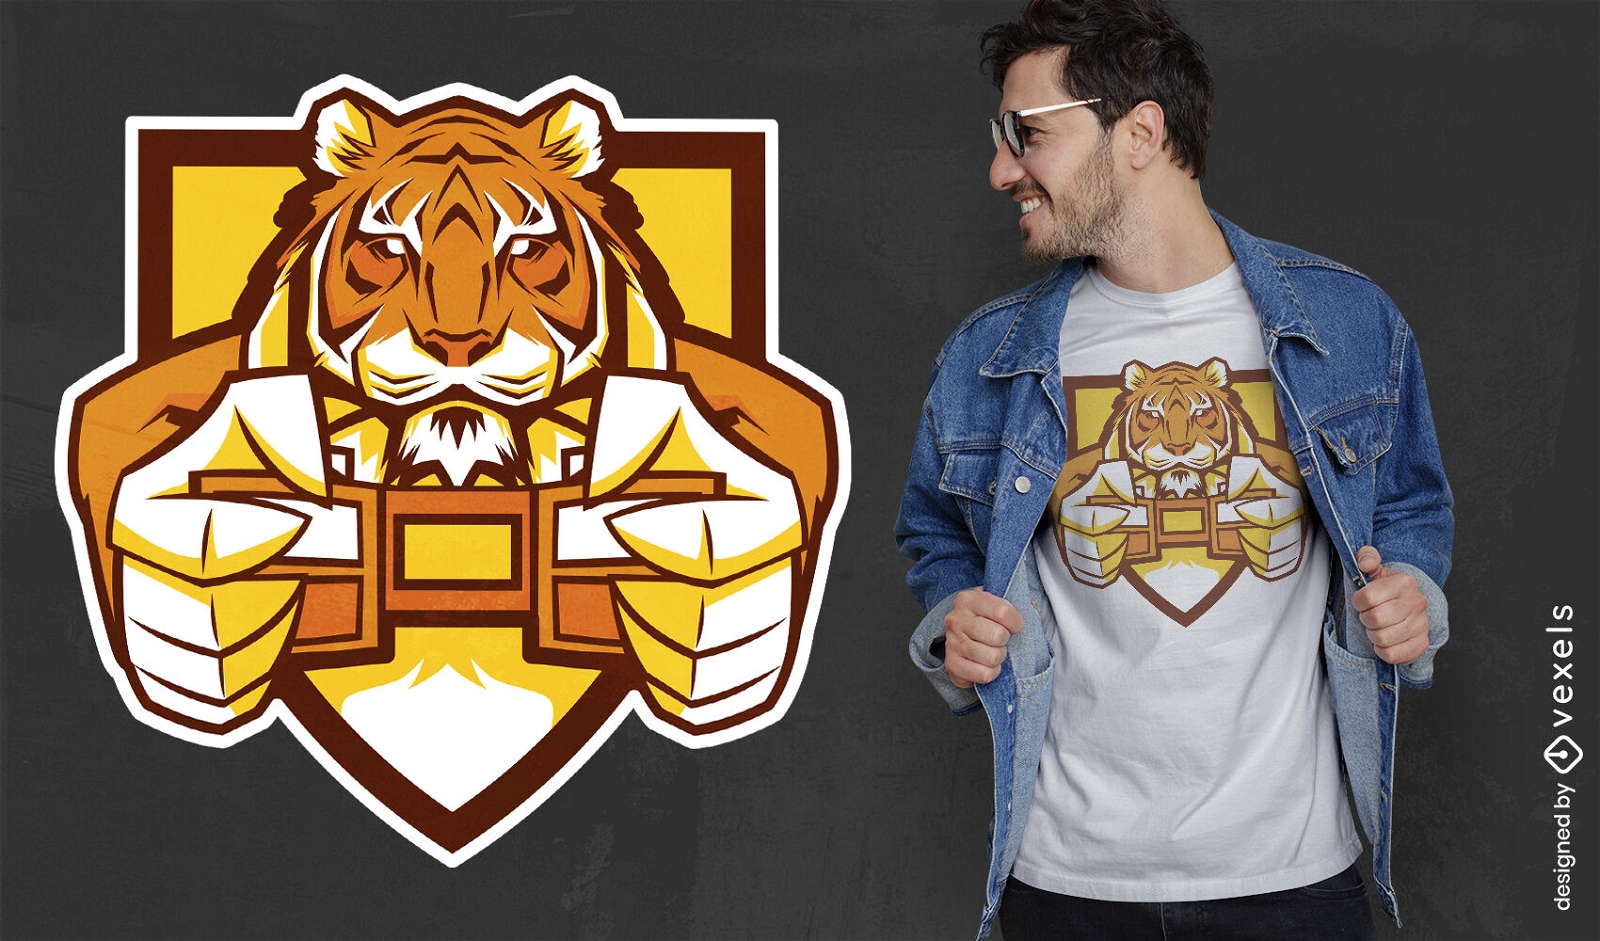 Animal tigre com design de camiseta de joystick